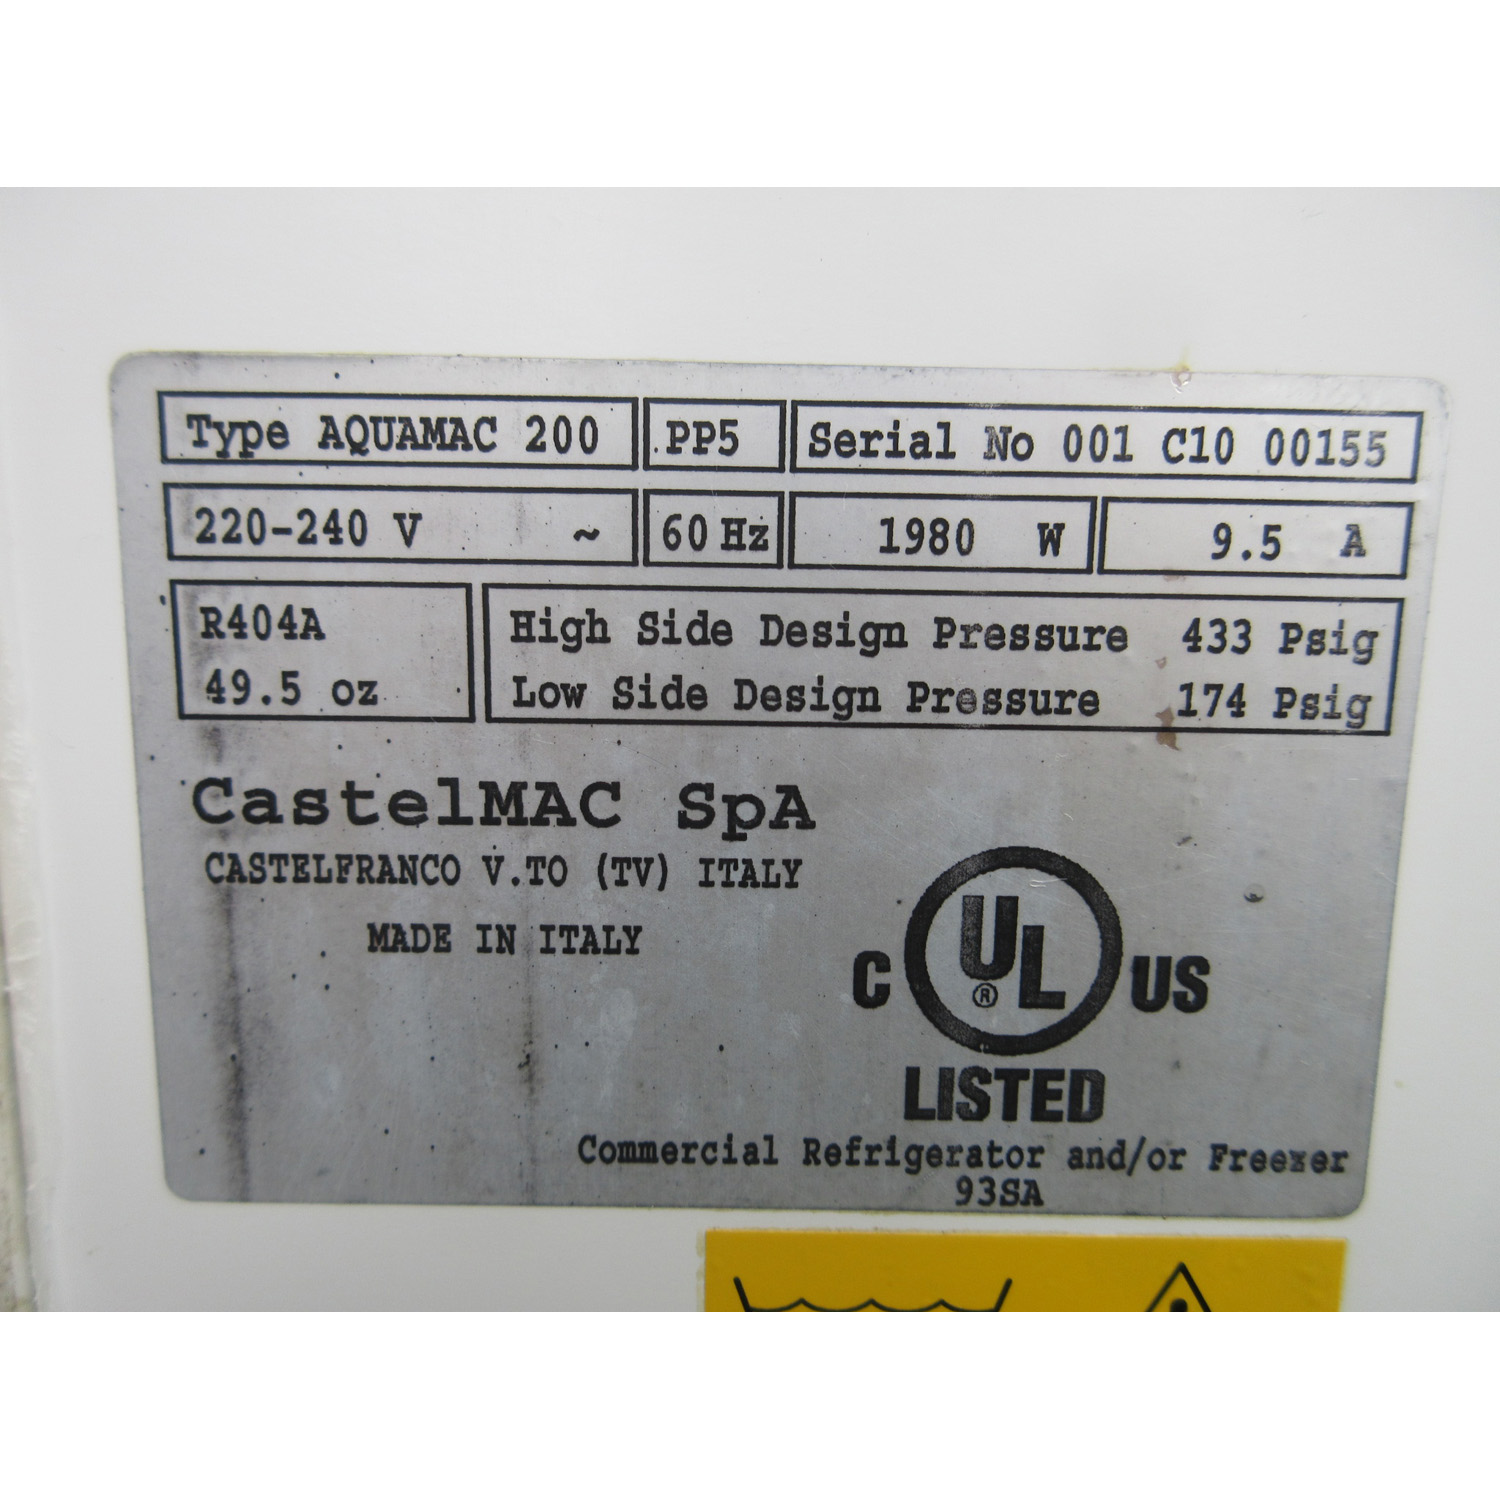 Tecnomac AQUAMAC-200 Water Chiller & Meter, Used Excellent Condition image 4